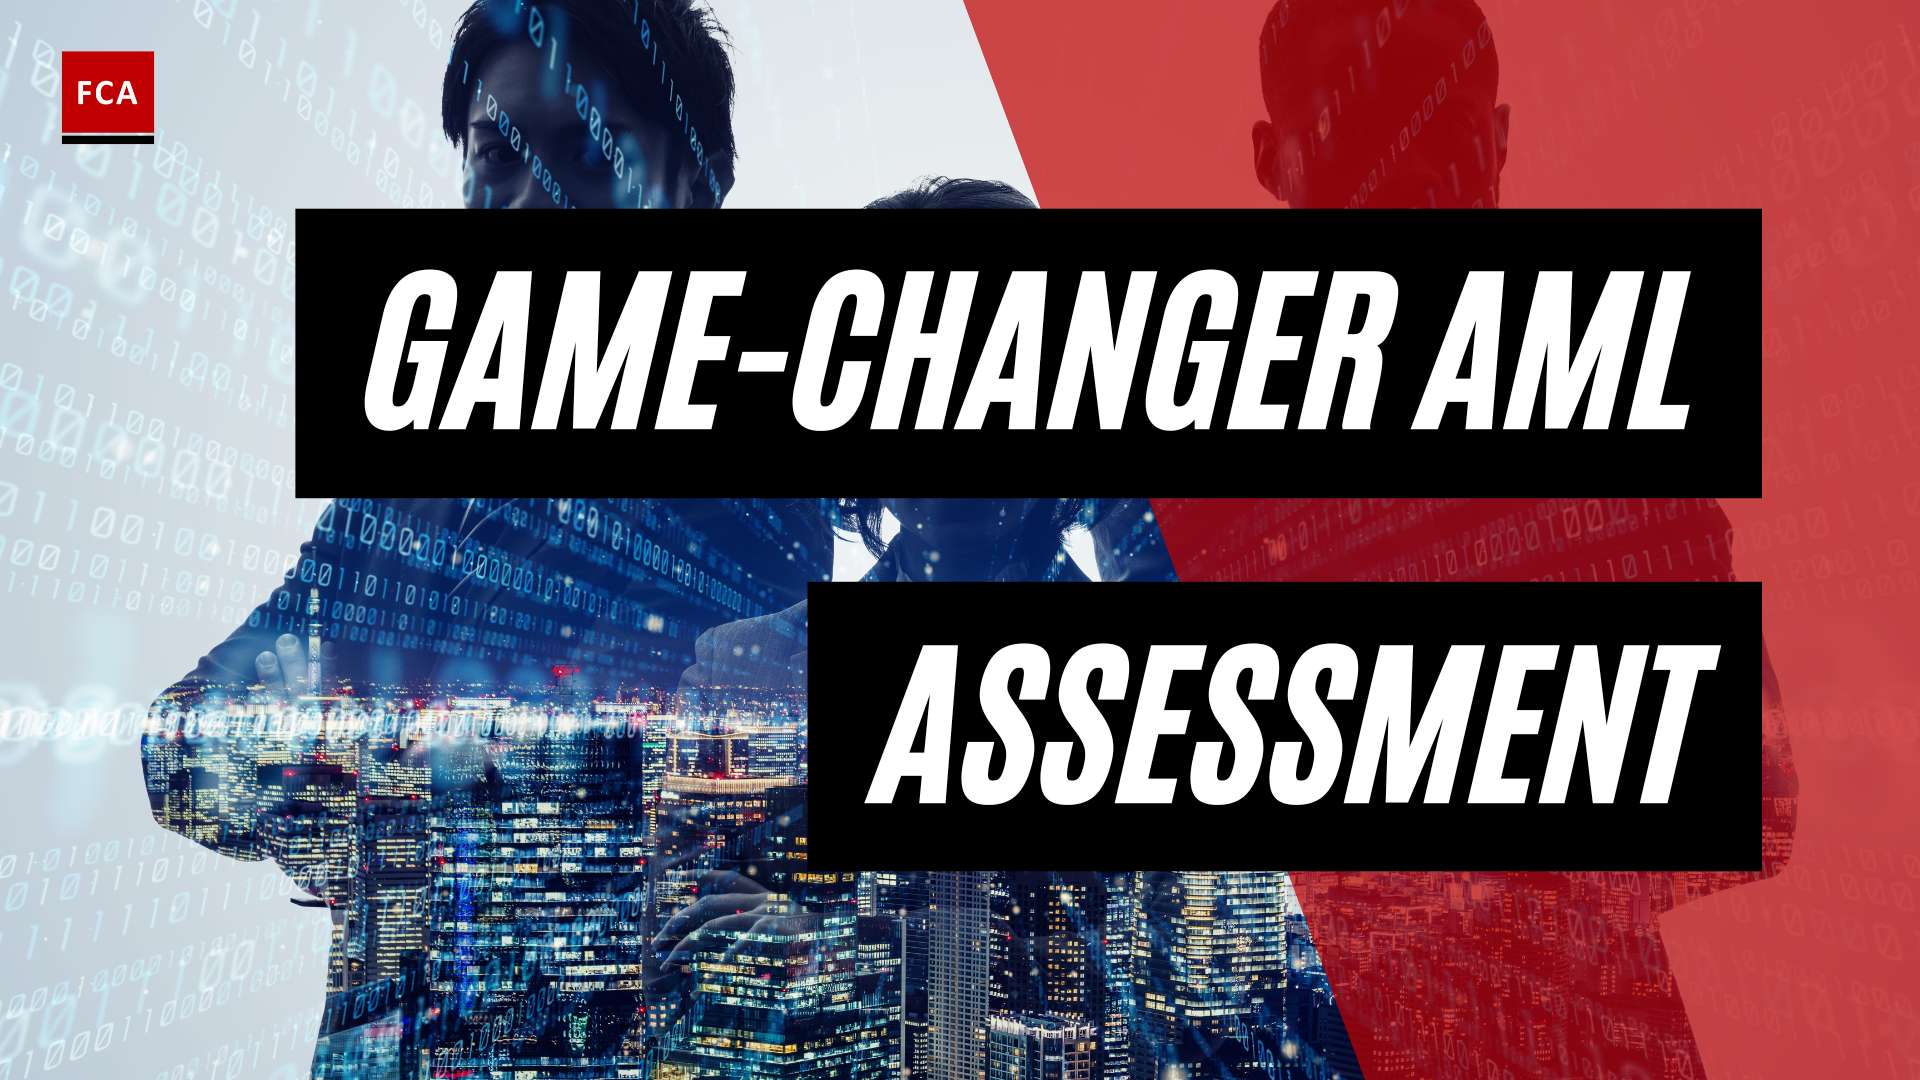 The Game-Changer: Aml Risk Assessment Template For Effective Risk Management